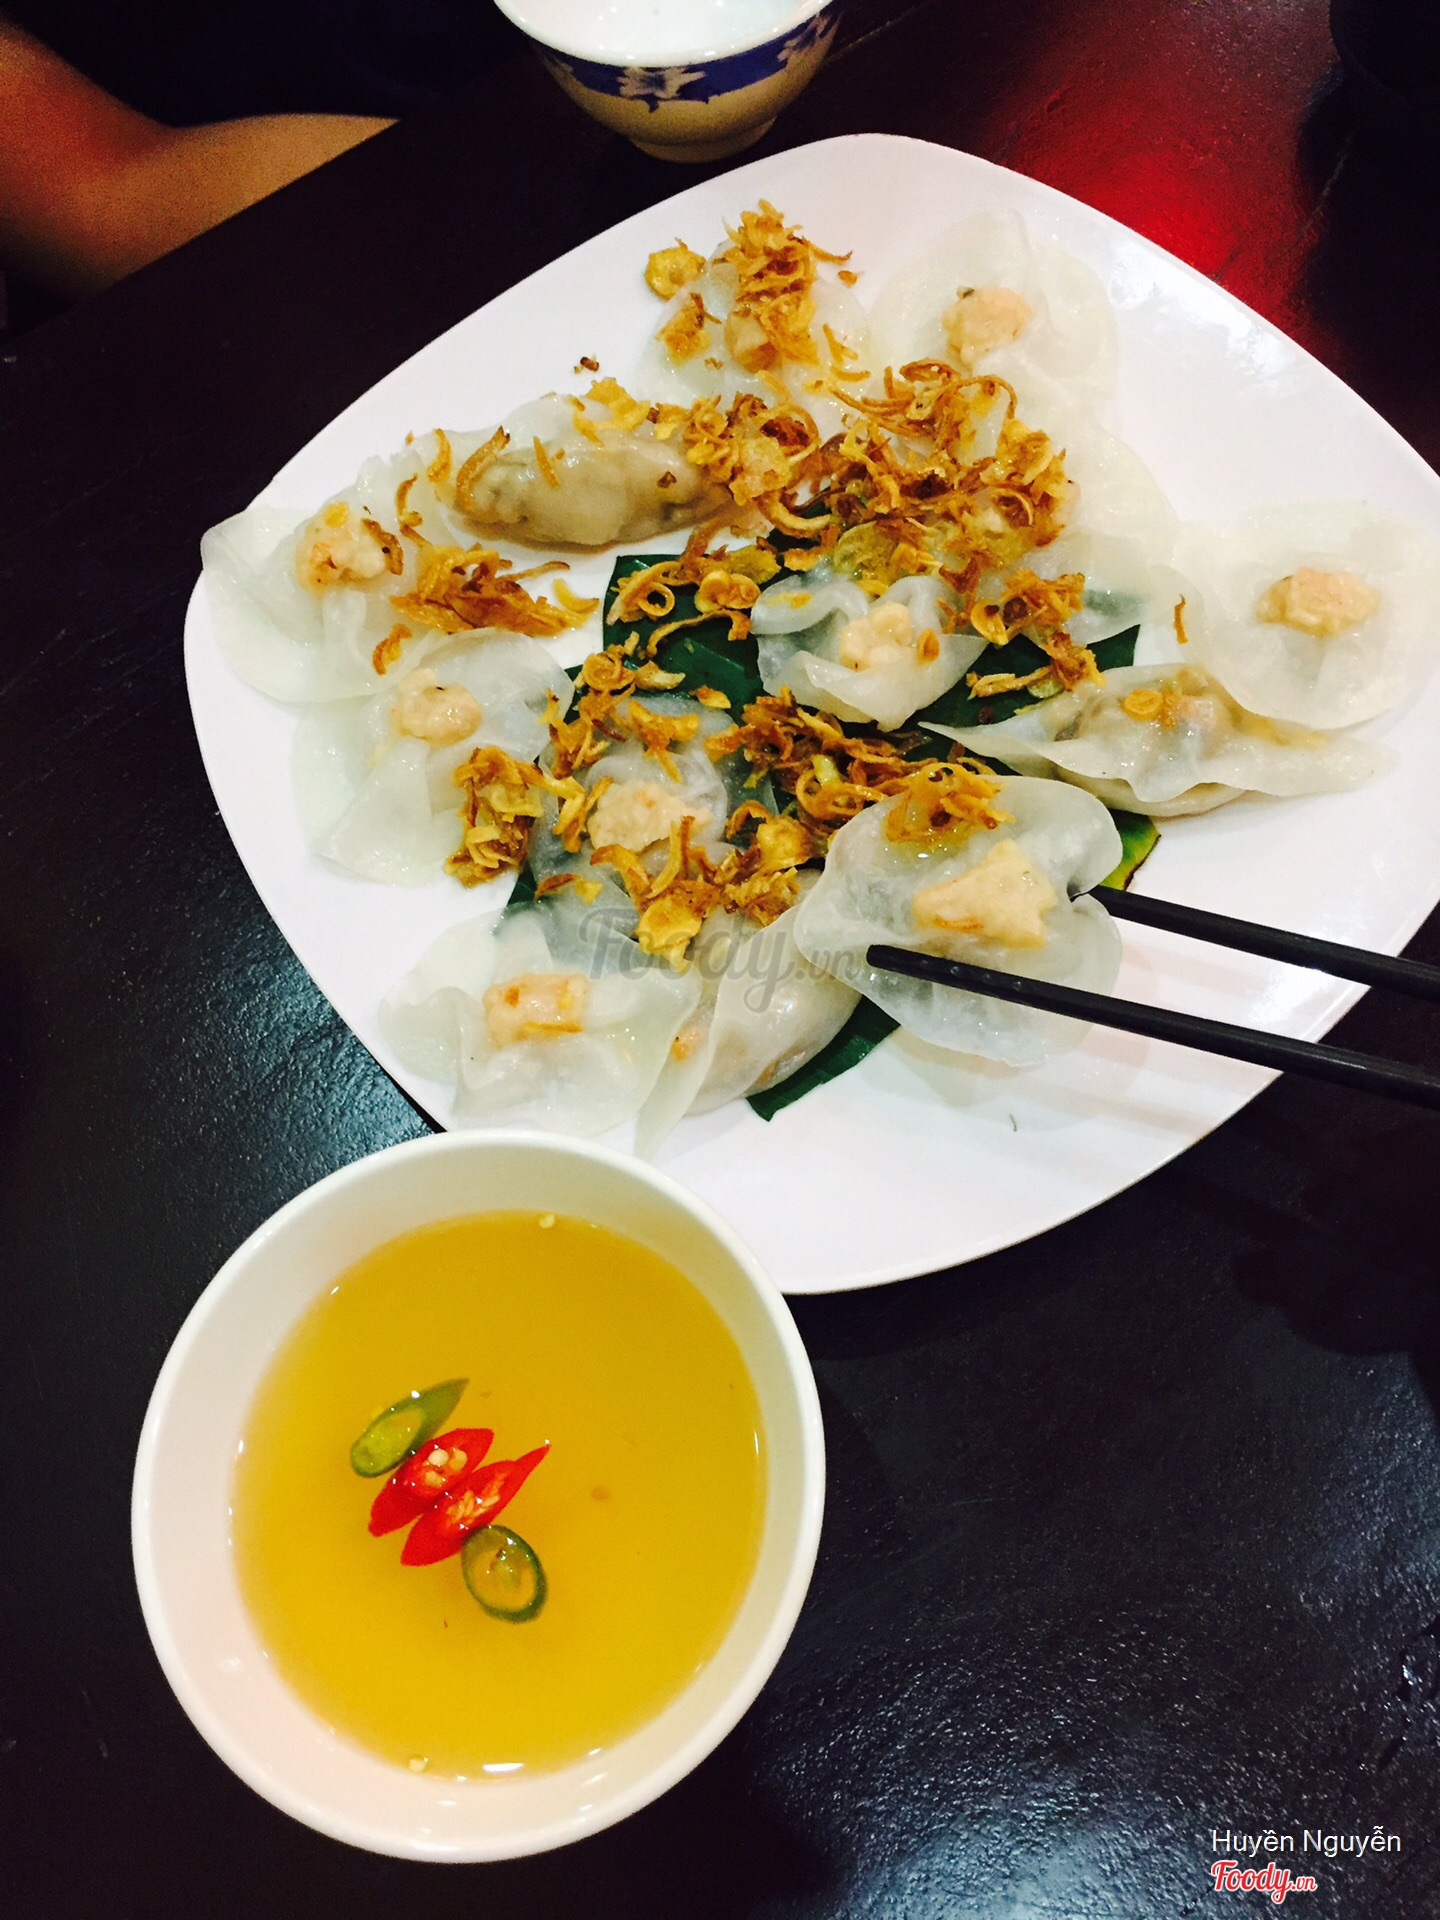 Ảnh: Huyền Nguyễn/Foody.